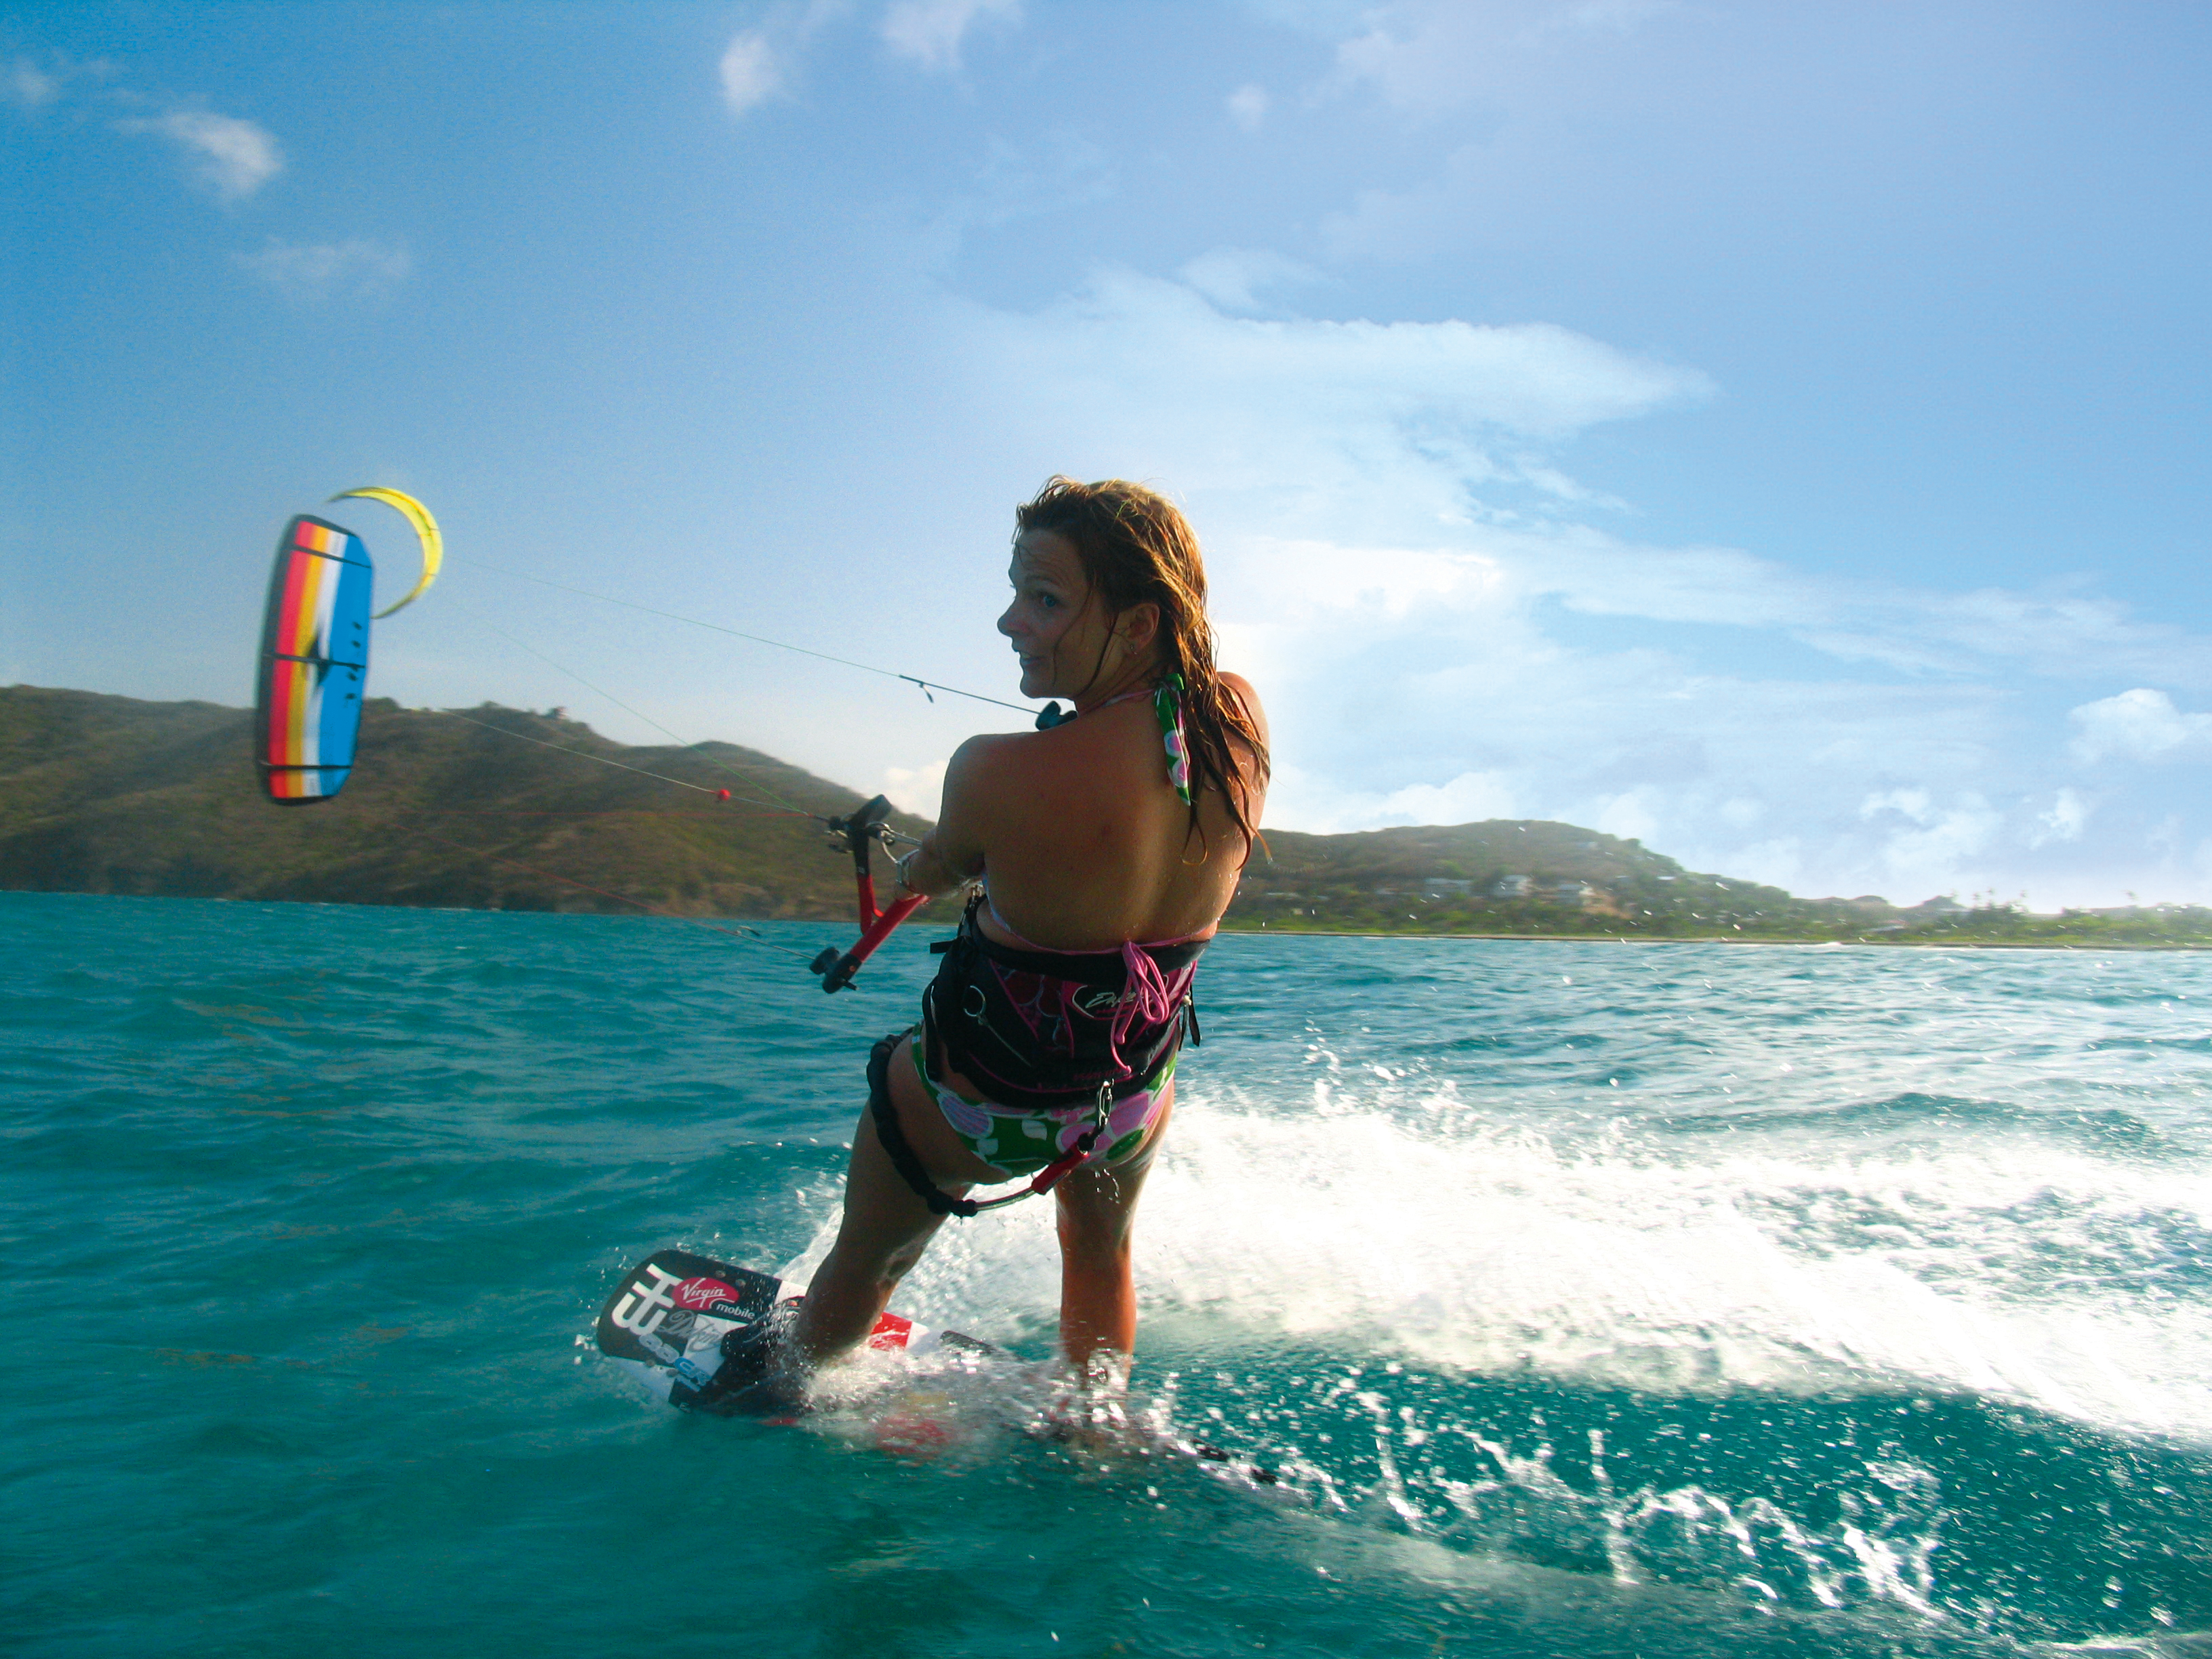 Woman kitesurfing in the ocean